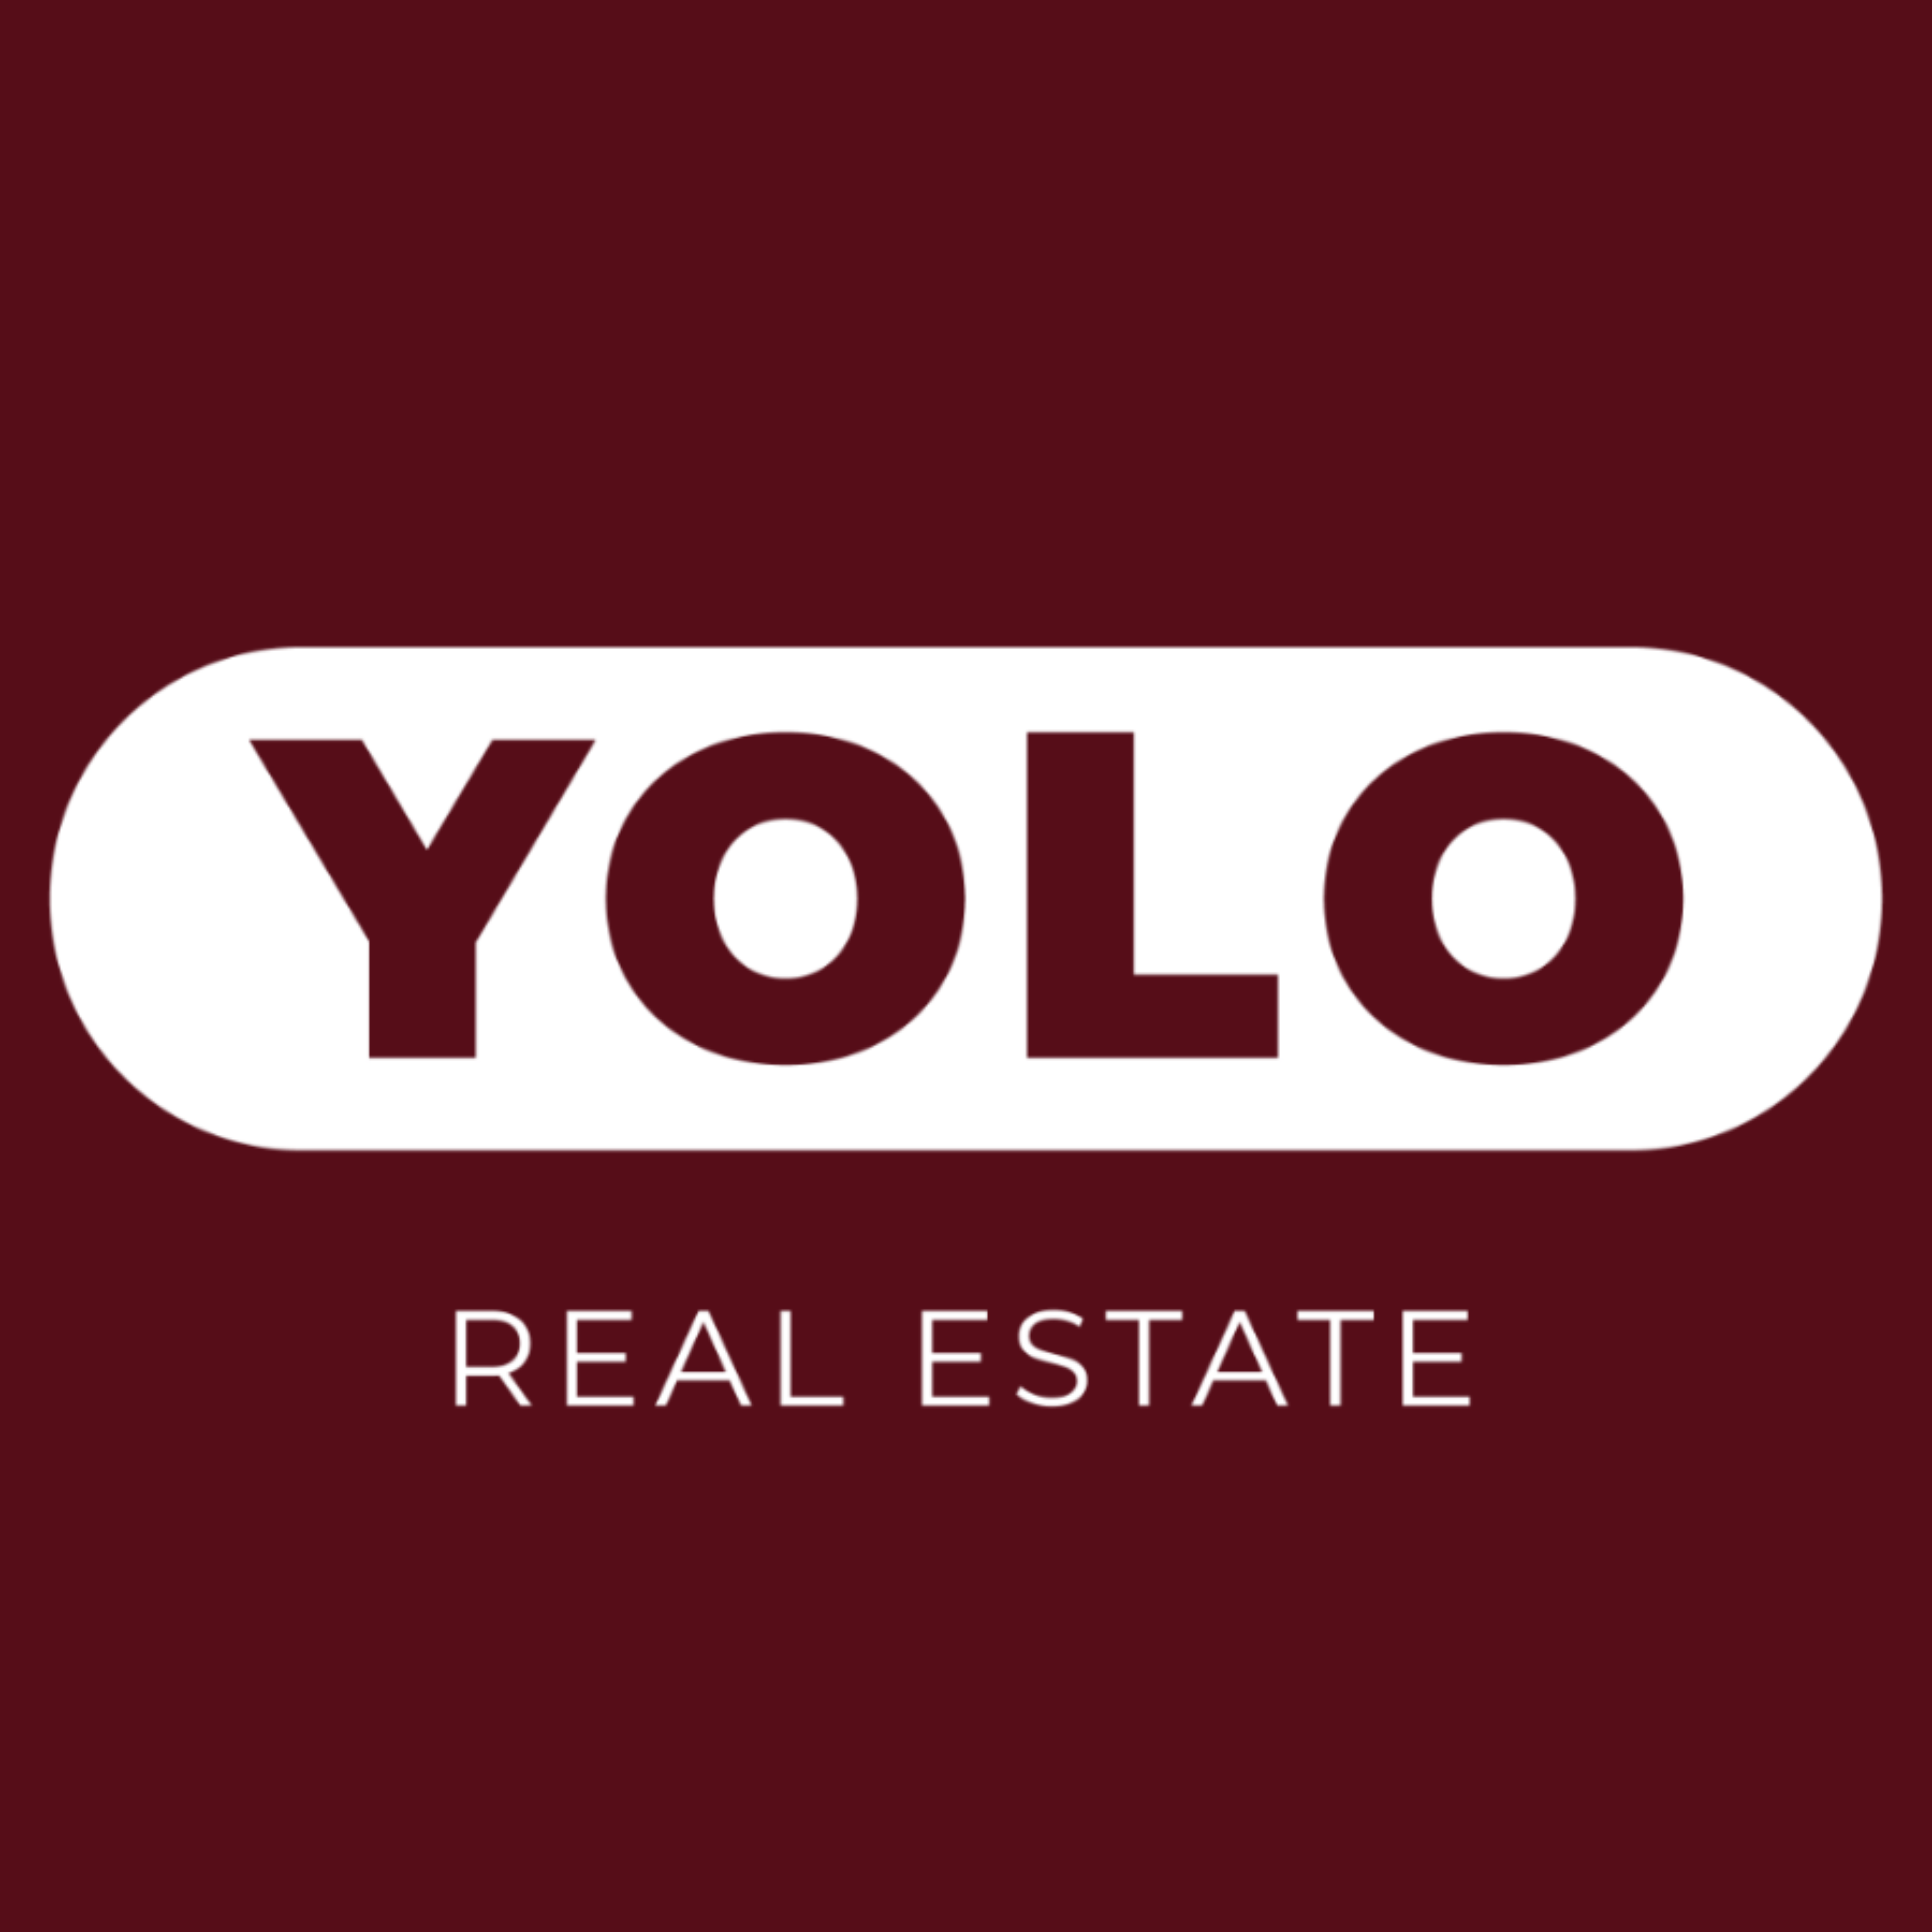 YOLO Real Estate